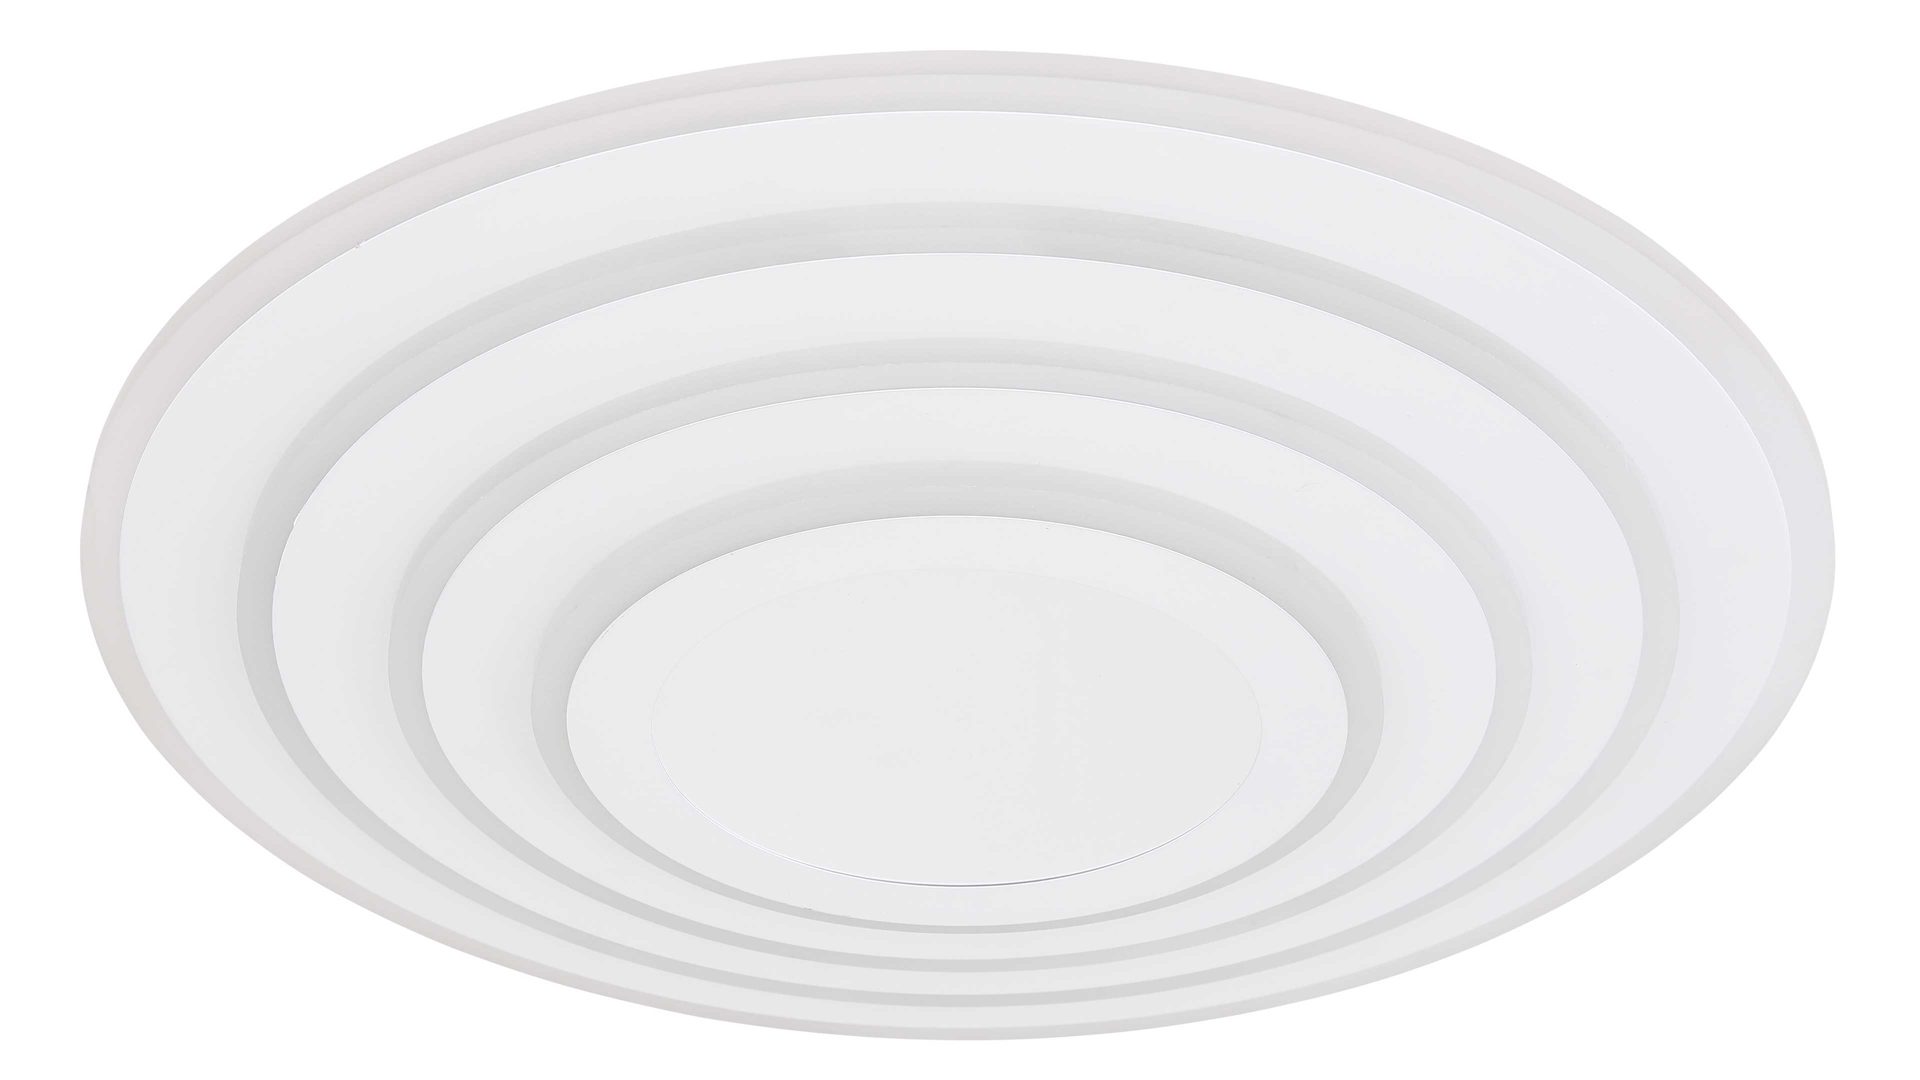 Deckenleuchte Globo lighting aus Metall in Weiß GLOBO Deckenlampe Jocelyn, per App steuerbar weißes Metall & opalweißes Acryl -  Durchmesser ca. 50 cm